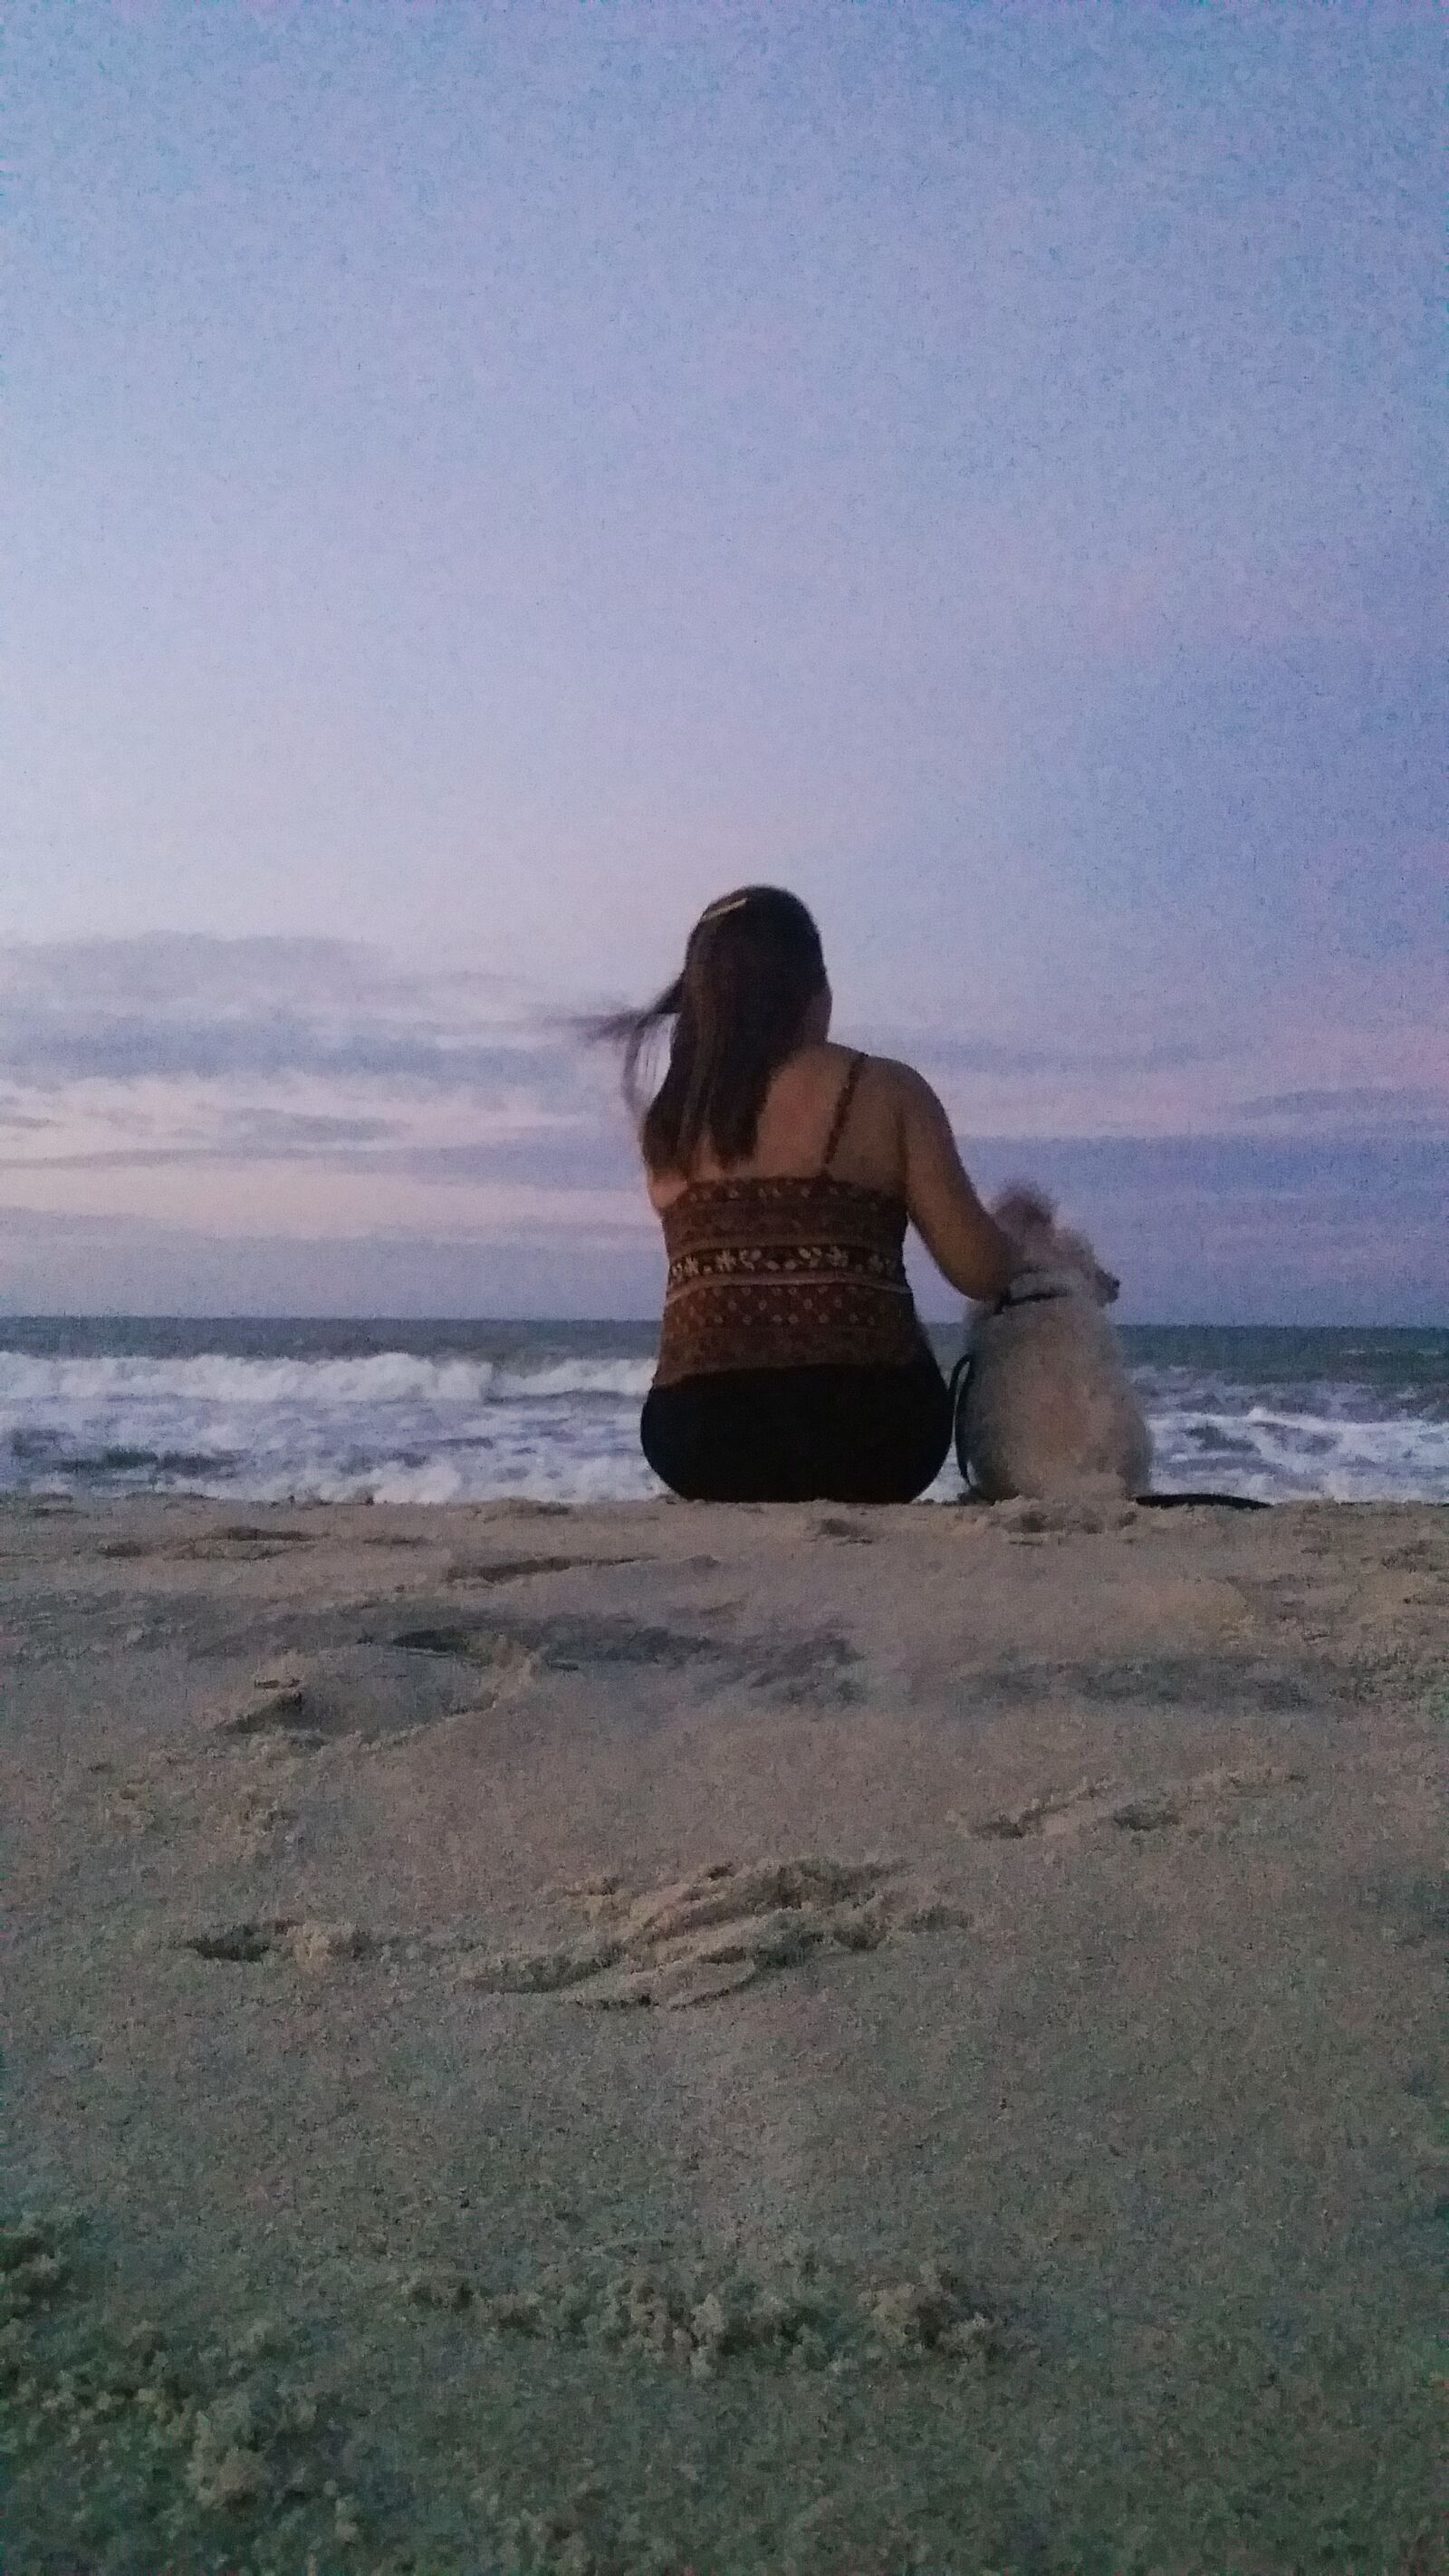 Samsung Galaxy A9 Pro sample photo. Beach, woman, dog photography